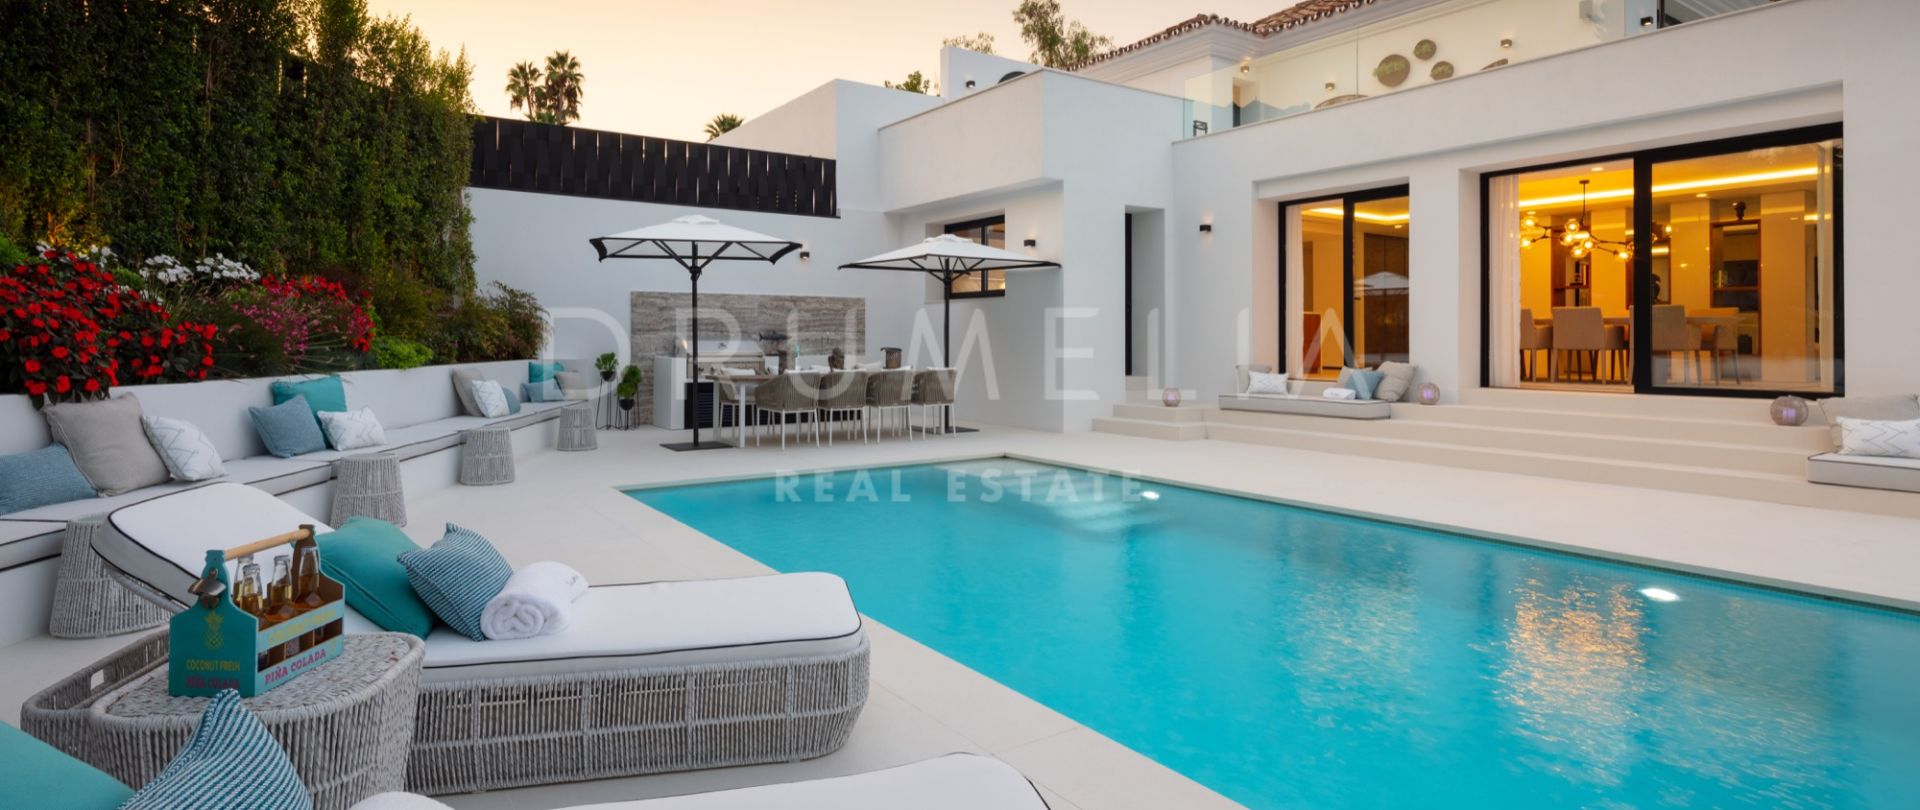 Lotus 5 - Fabuleuse villa haut de gamme de style moderne dans la vallée du golf de Nueva Andalucía.